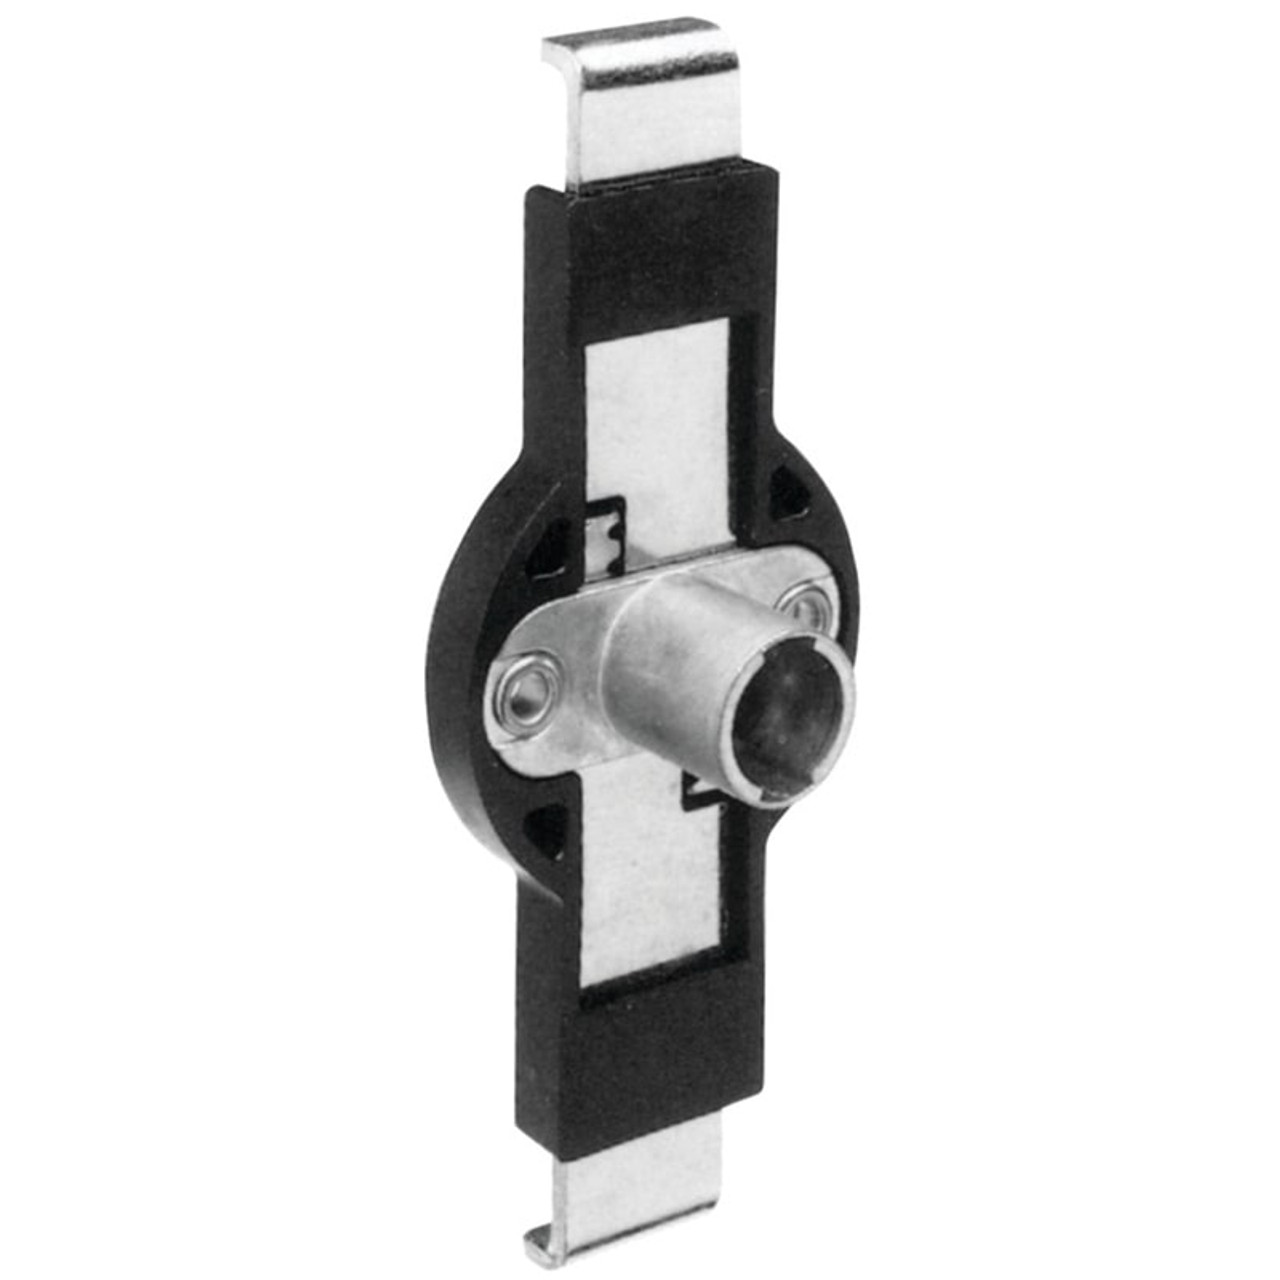 Timberline CB-251 Offset Deadbolt  Double Cabinet Door Lock System 250